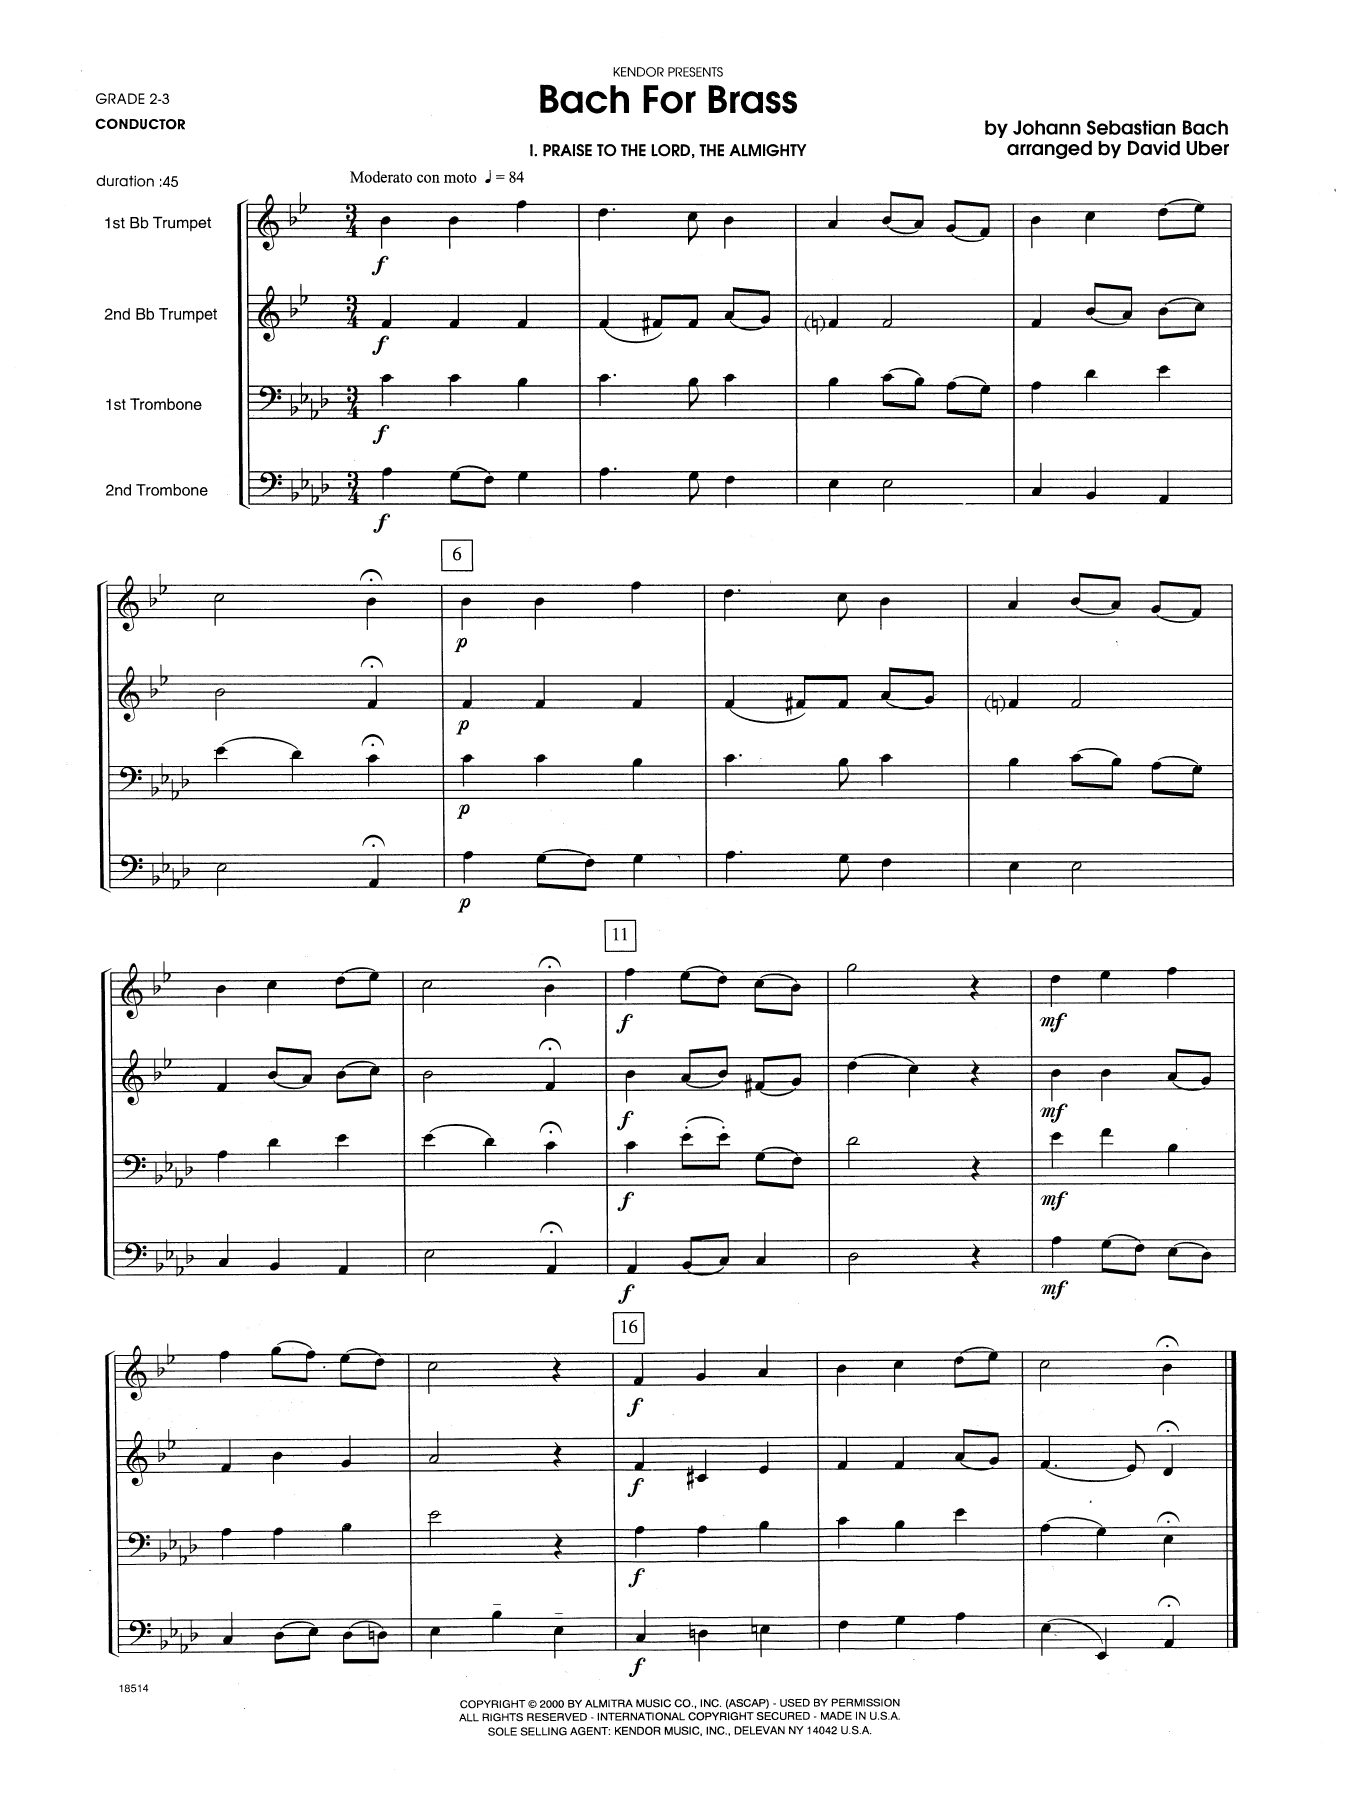 Download David Uber Bach For Brass - Full Score Sheet Music